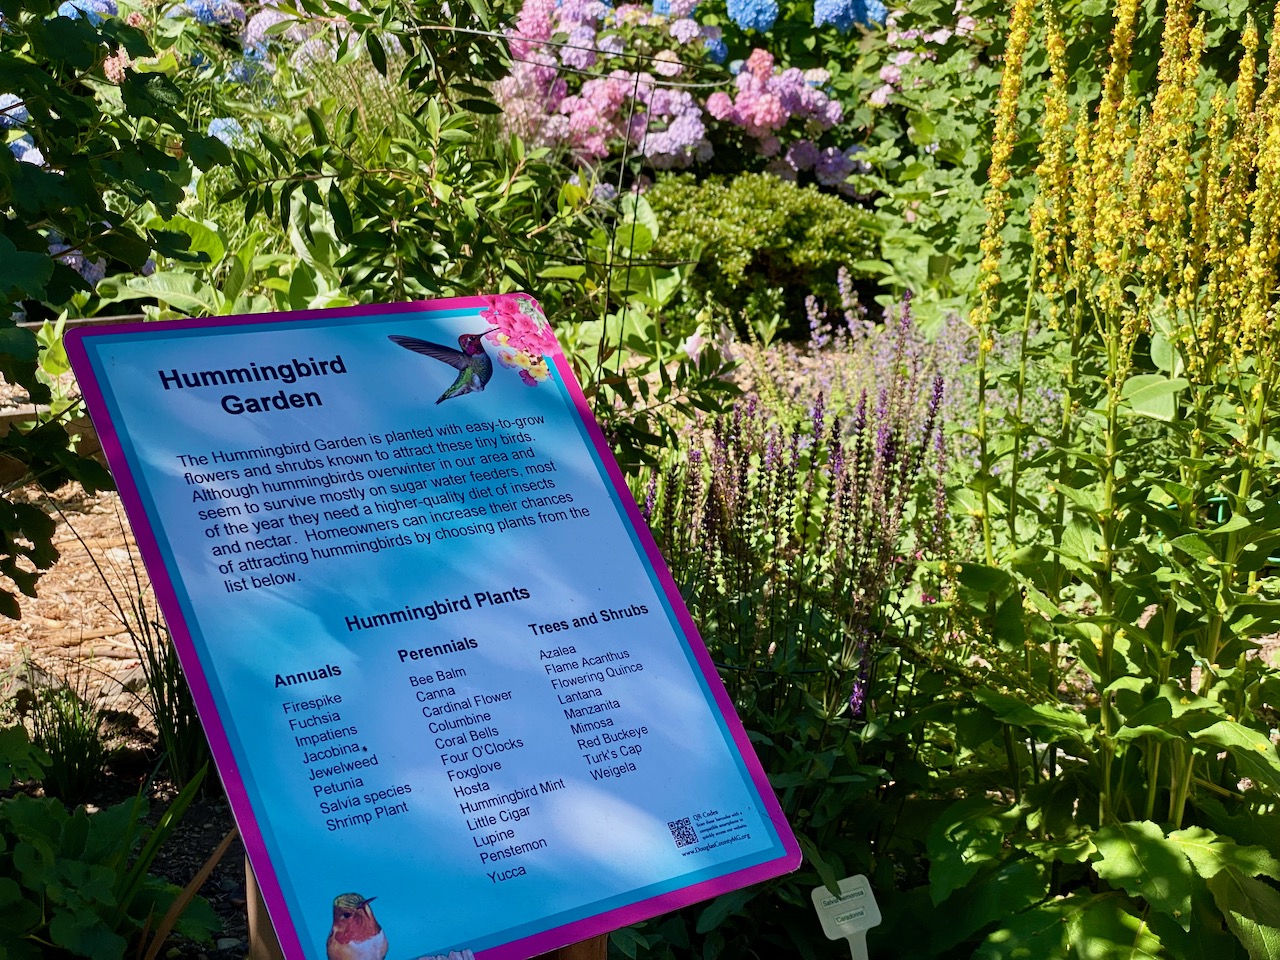 Hummingbird Garden sign in the Discovery Garden, photo by Geoff Puryear